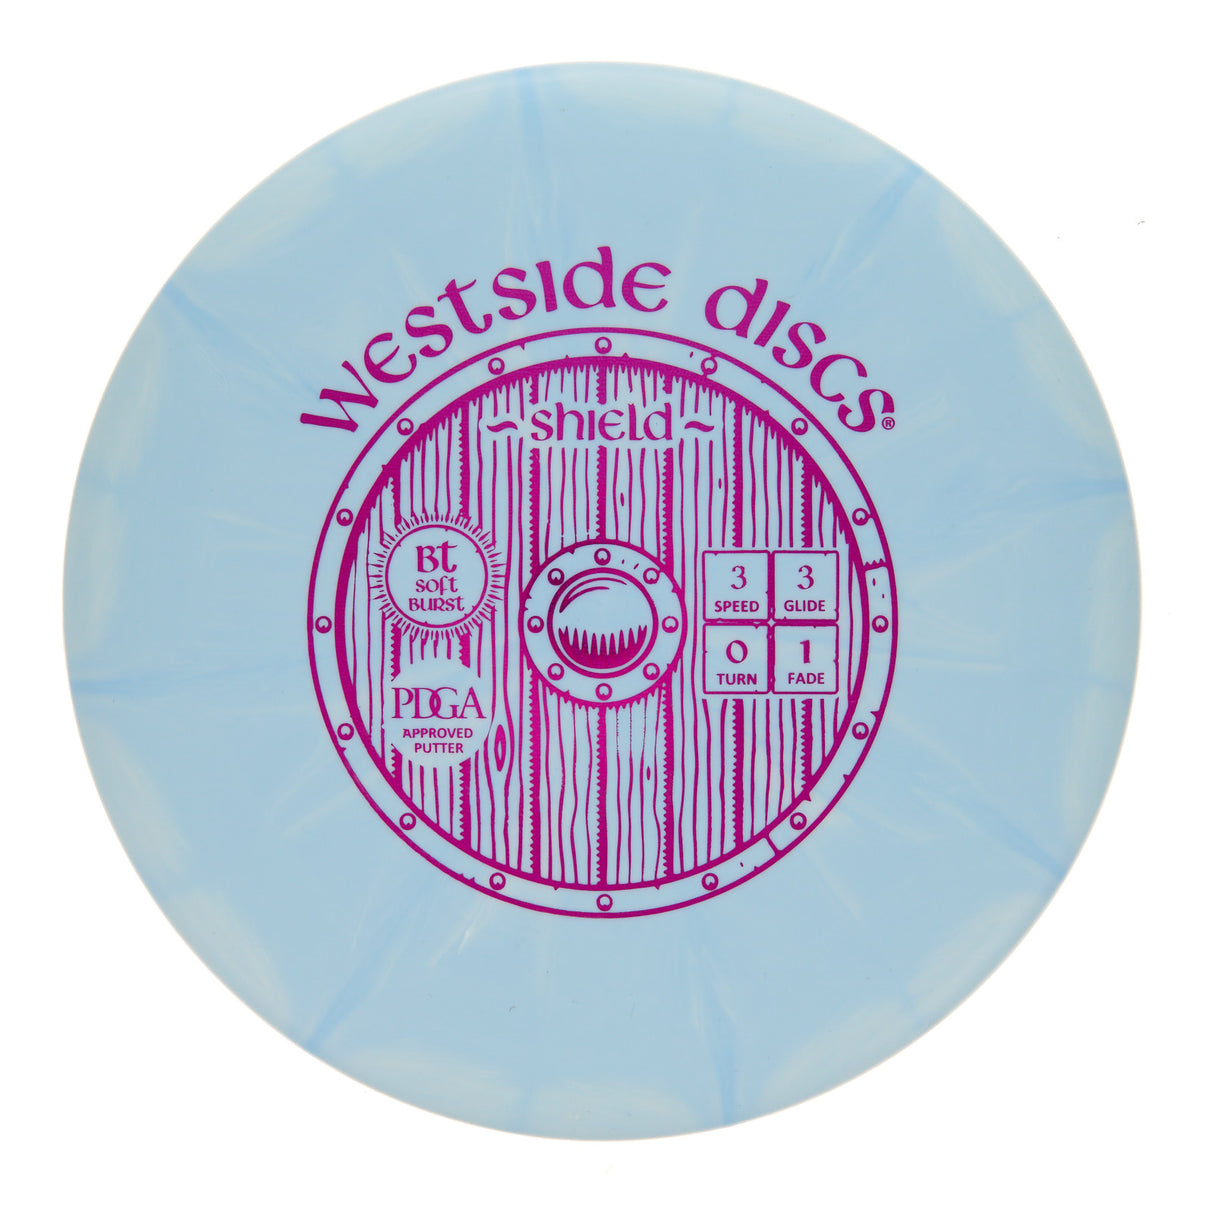 Westside Shield - BT Soft Burst 175g | Style 0003